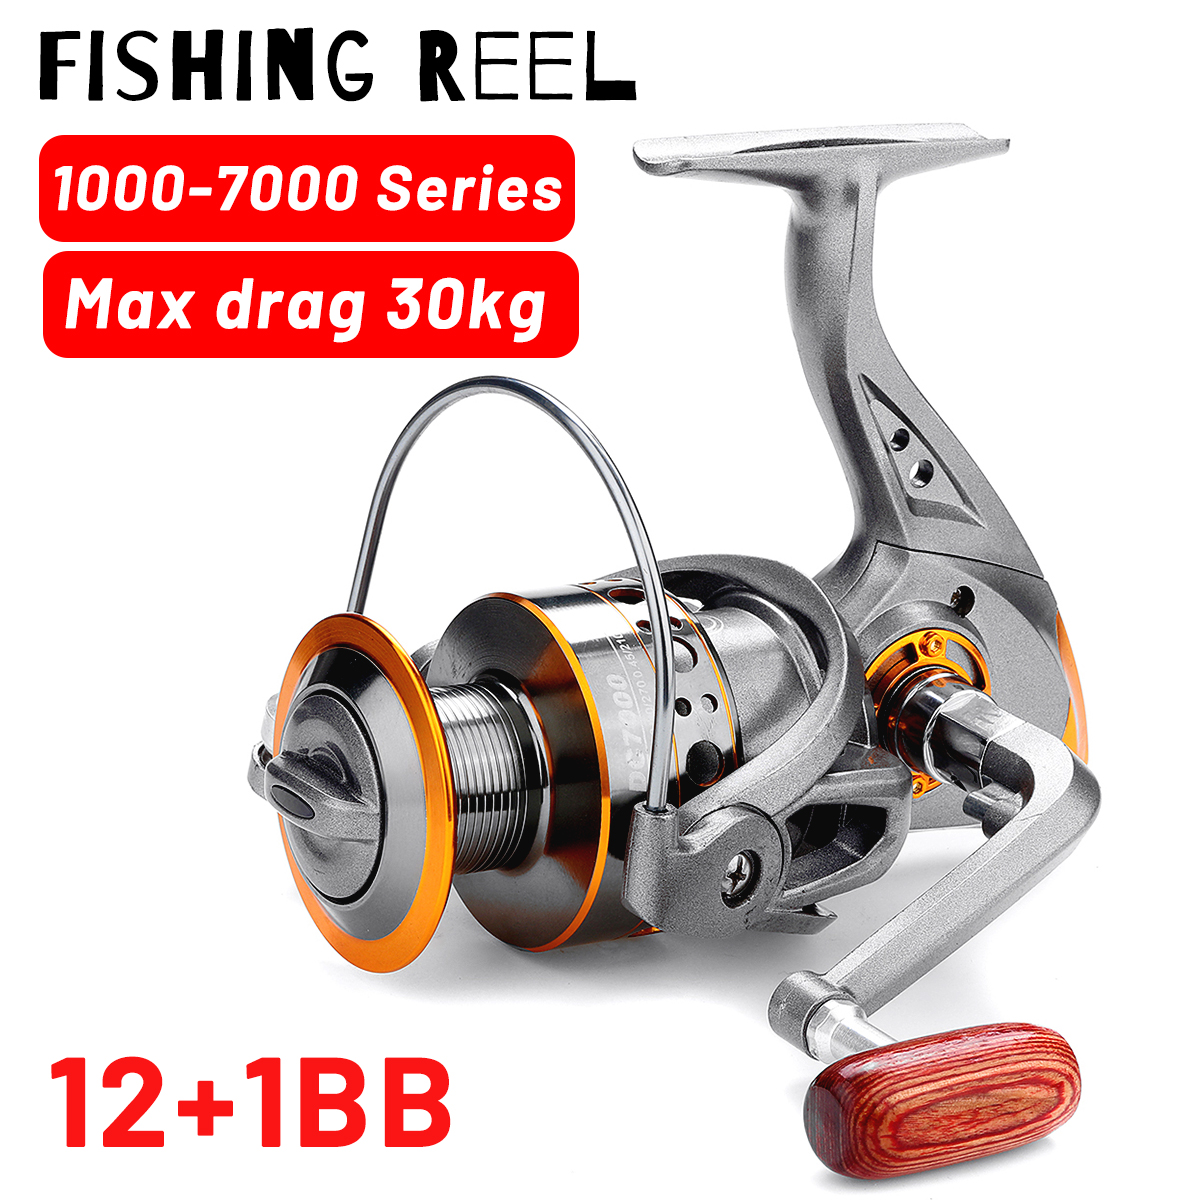 ZANLURE-521-13BB-Fishing-Reel-Metal-Spinning-Baitcasting-Reels-30kg-Max-Drag-Saltwater-Fishing-Tackl-1837475-1